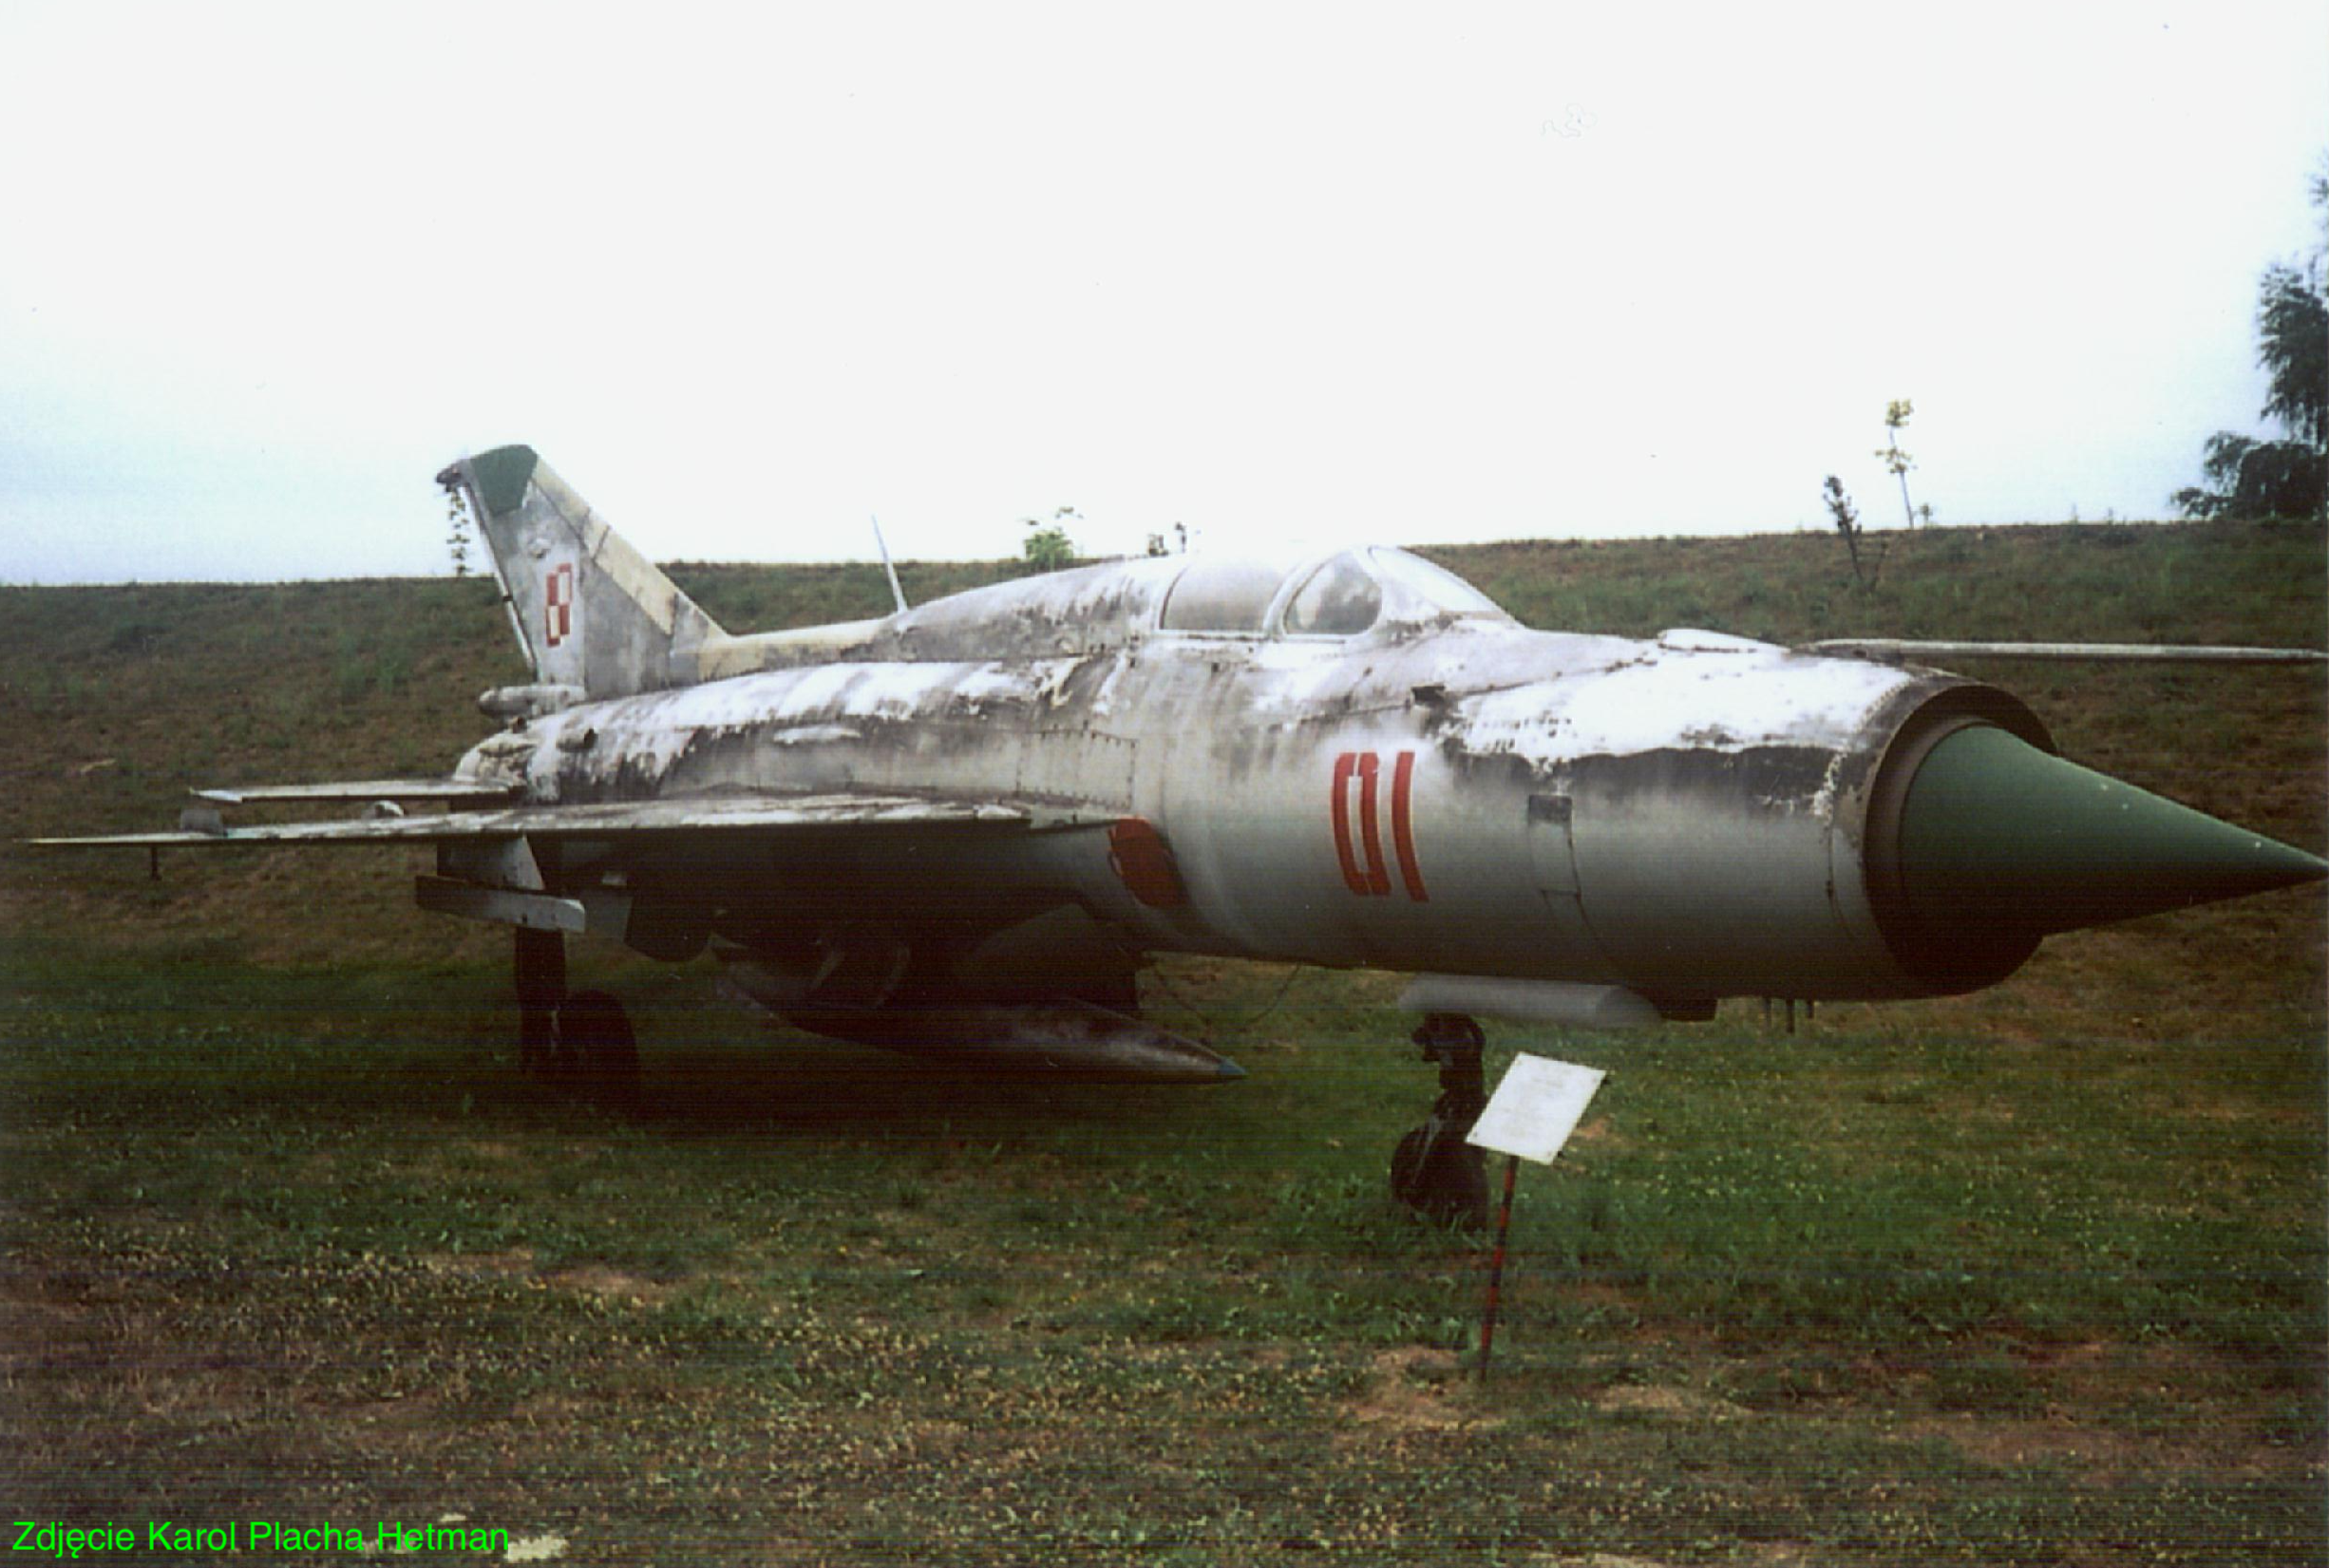 MiG-21 PFM nb 01. 2002 rok. Zdjęcie Karol Placha Hetman